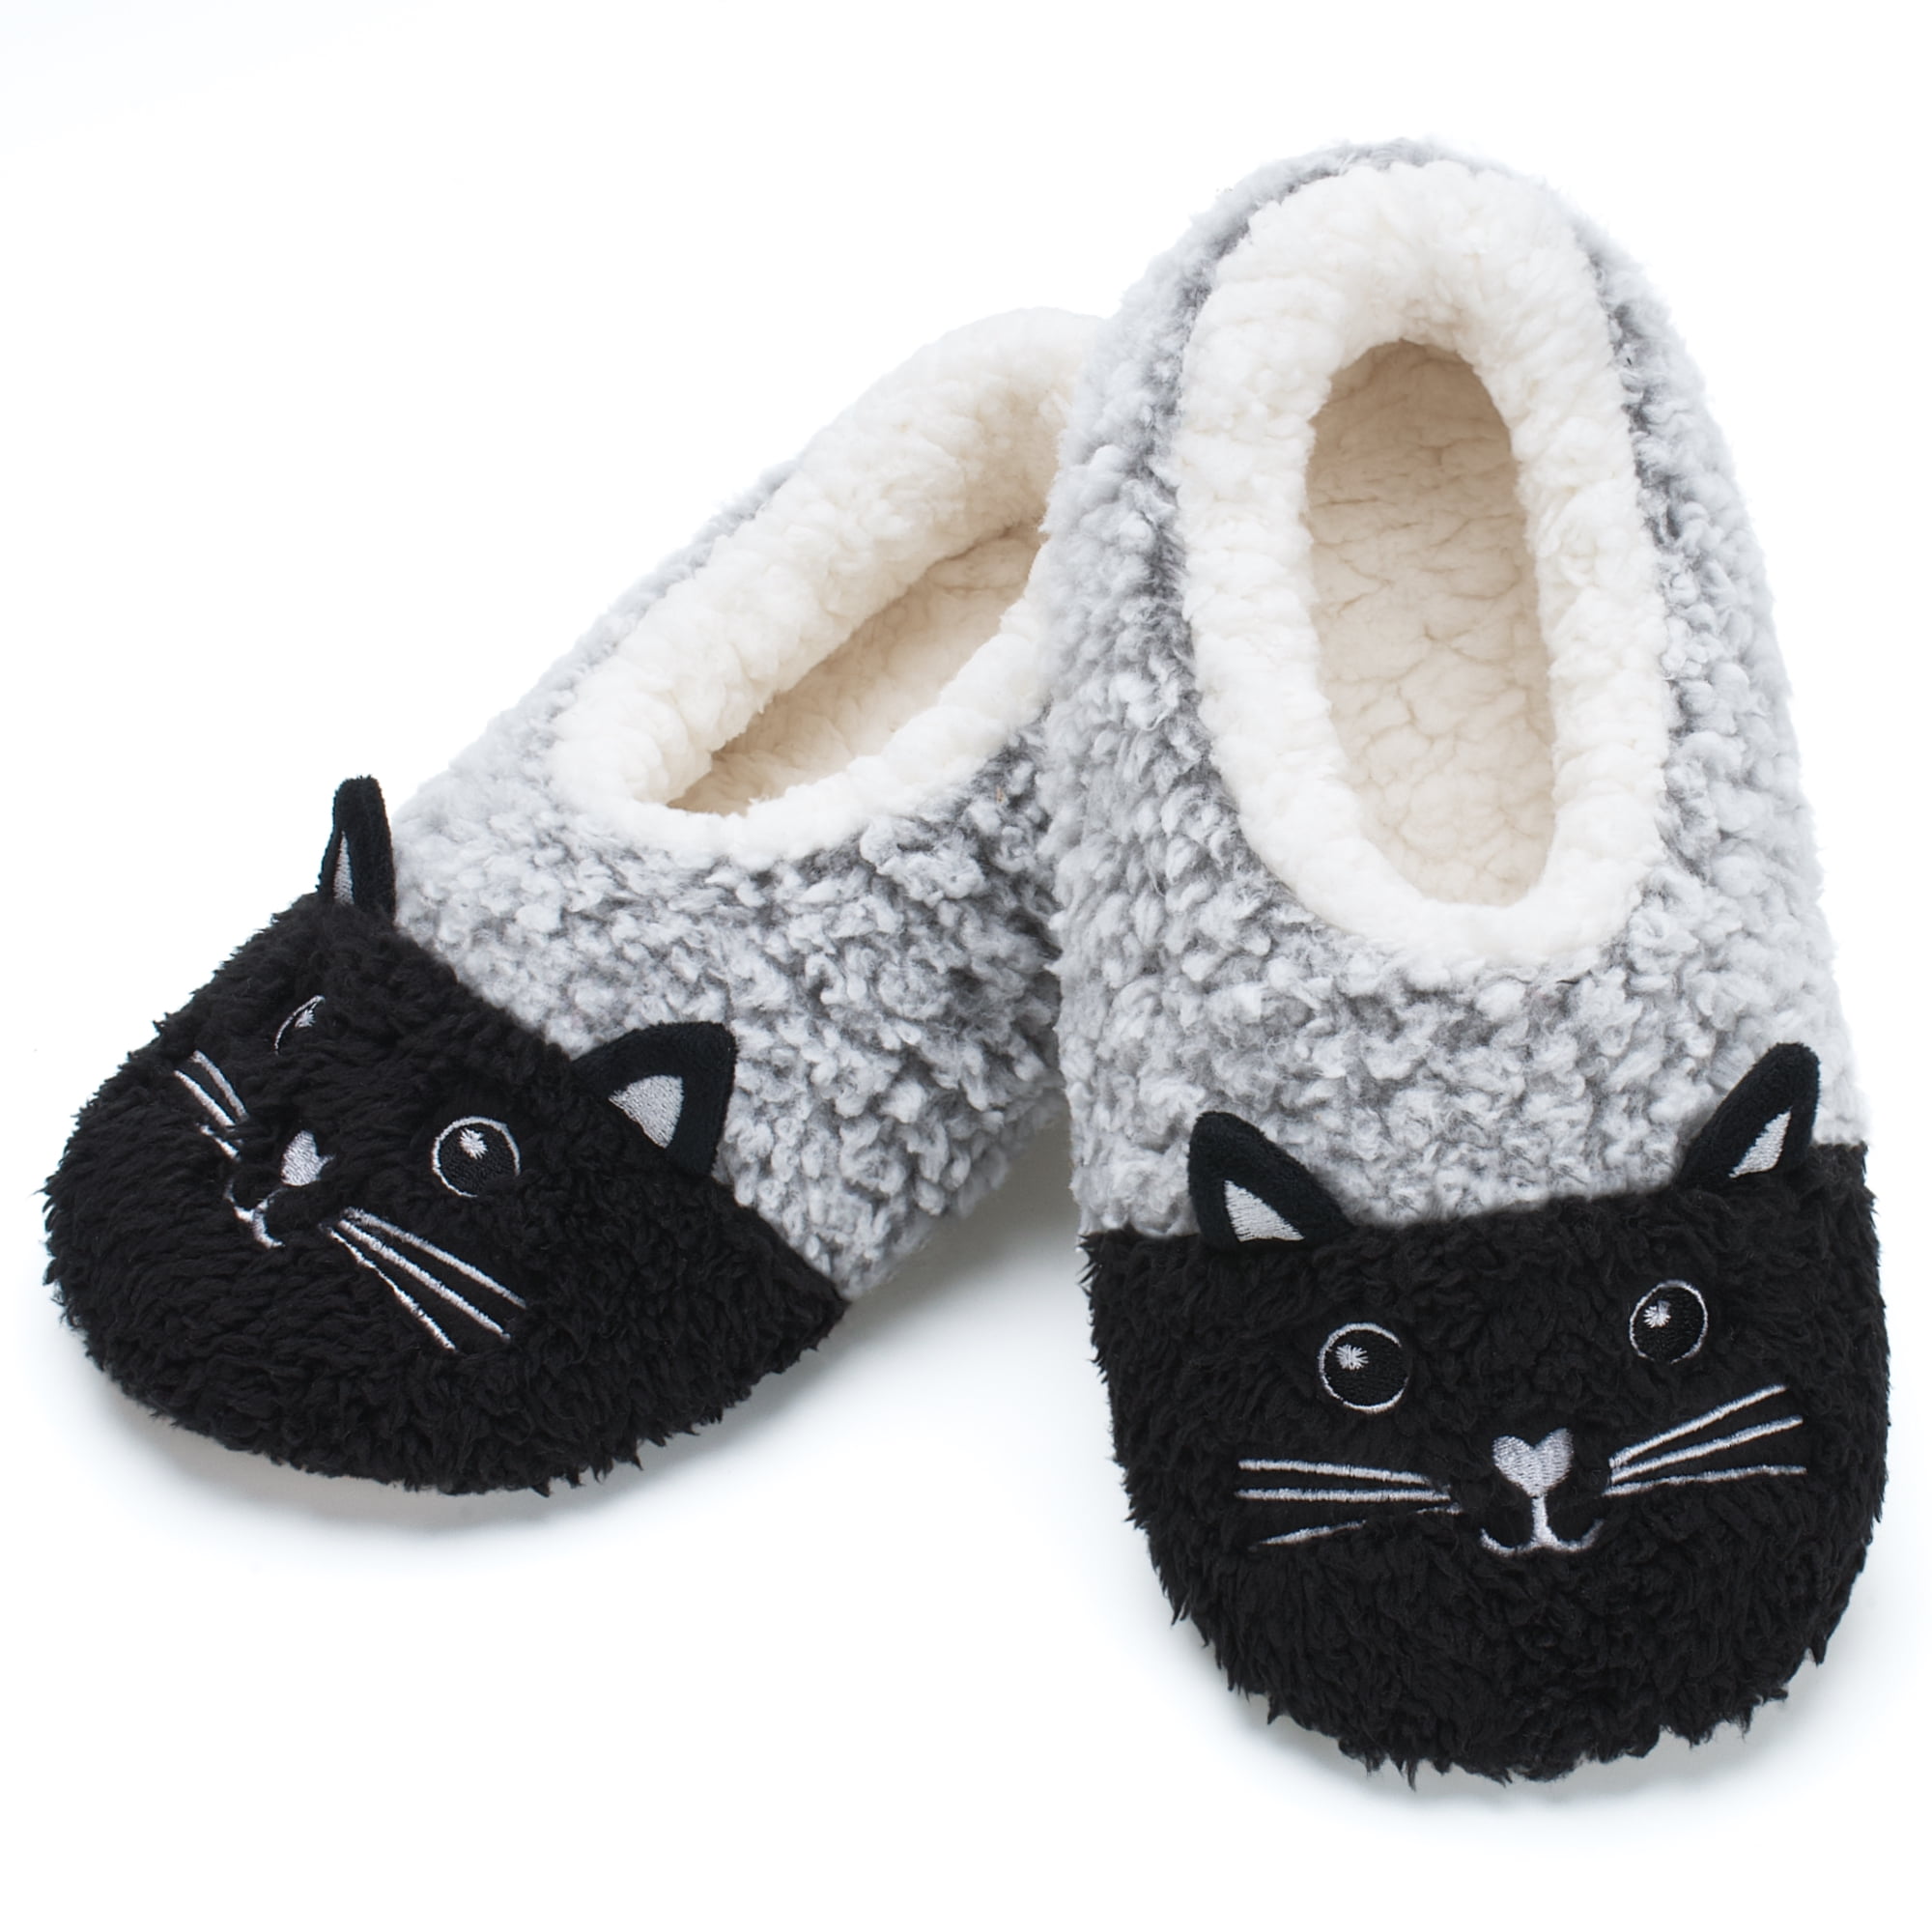 Cute Fuzzy Animal Slippers for Women Girls Teens Kids, Warm Fluffy ...